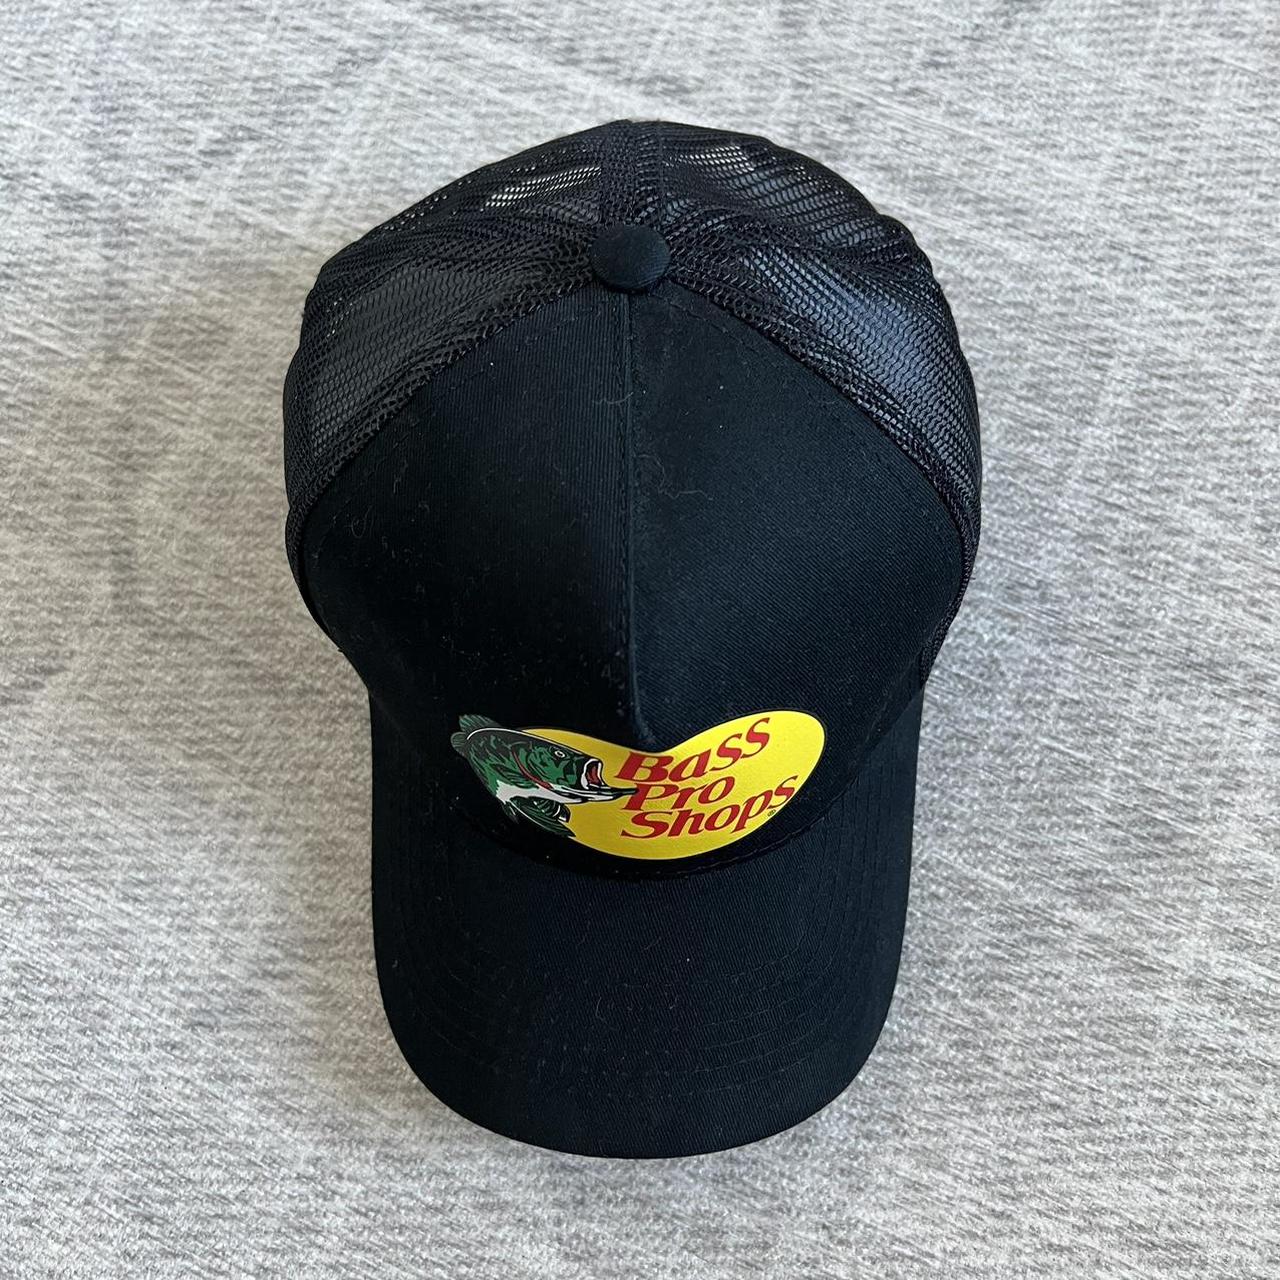 Bass Pro Shop Hat [Black][White] outdoor, Truckers - Depop